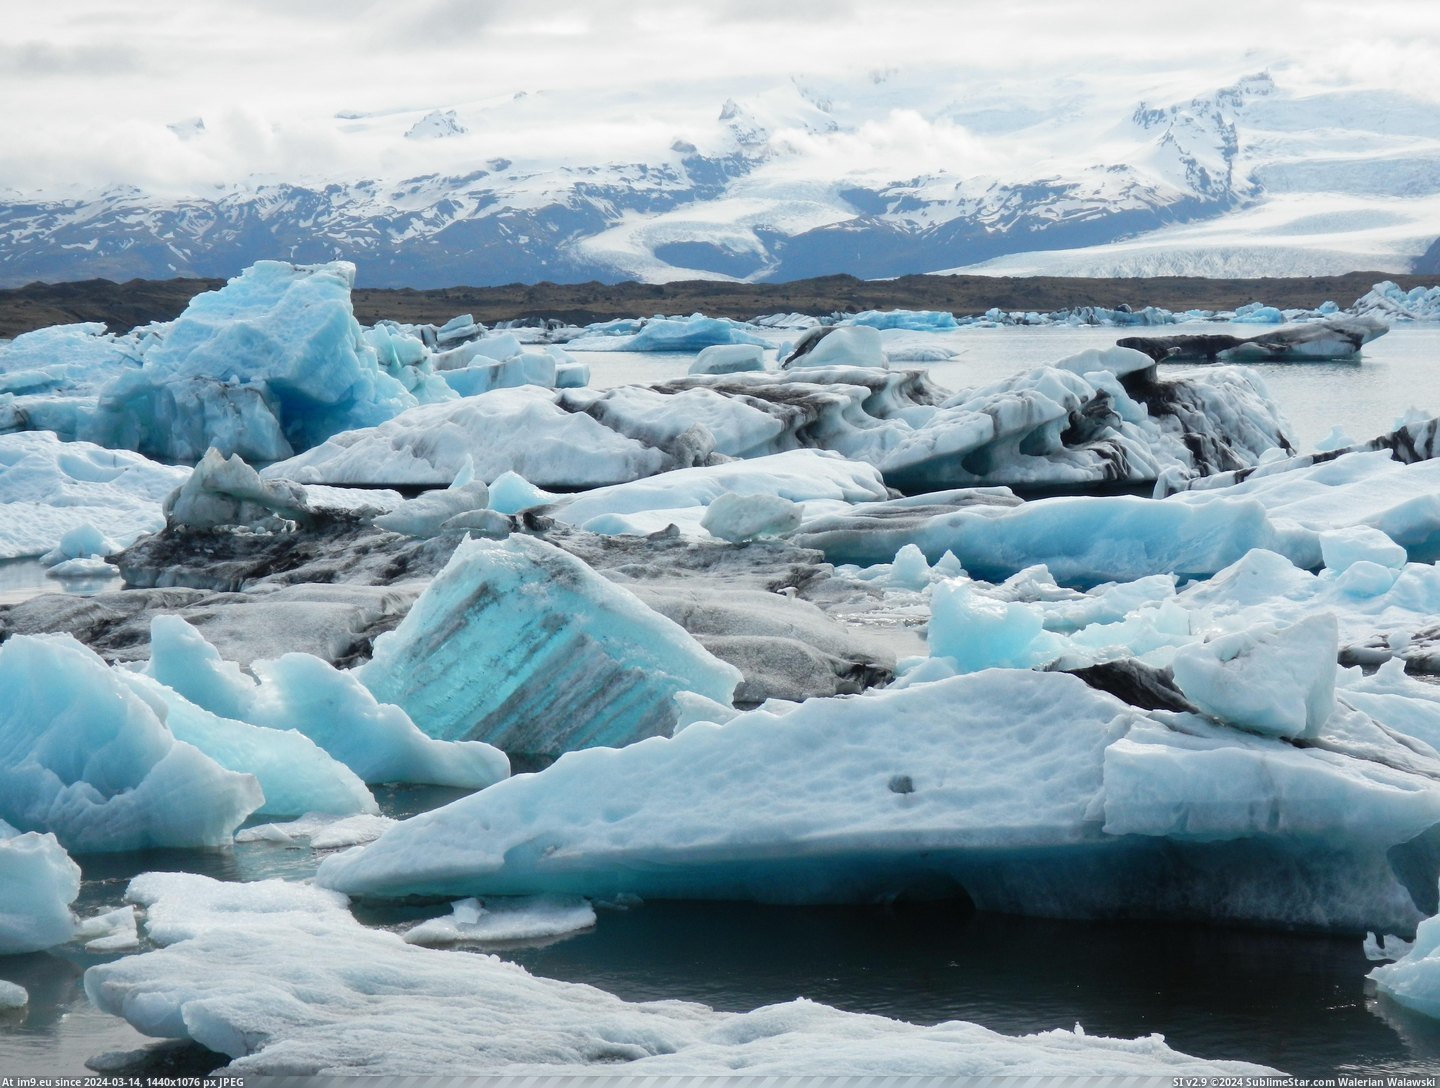 #Picture #4608x3456 #Glacial #Lagoon [Earthporn] Jokulsarlon Glacial Lagoon- picture taken 6-4-2015 [4608x3456] Pic. (Изображение из альбом My r/EARTHPORN favs))